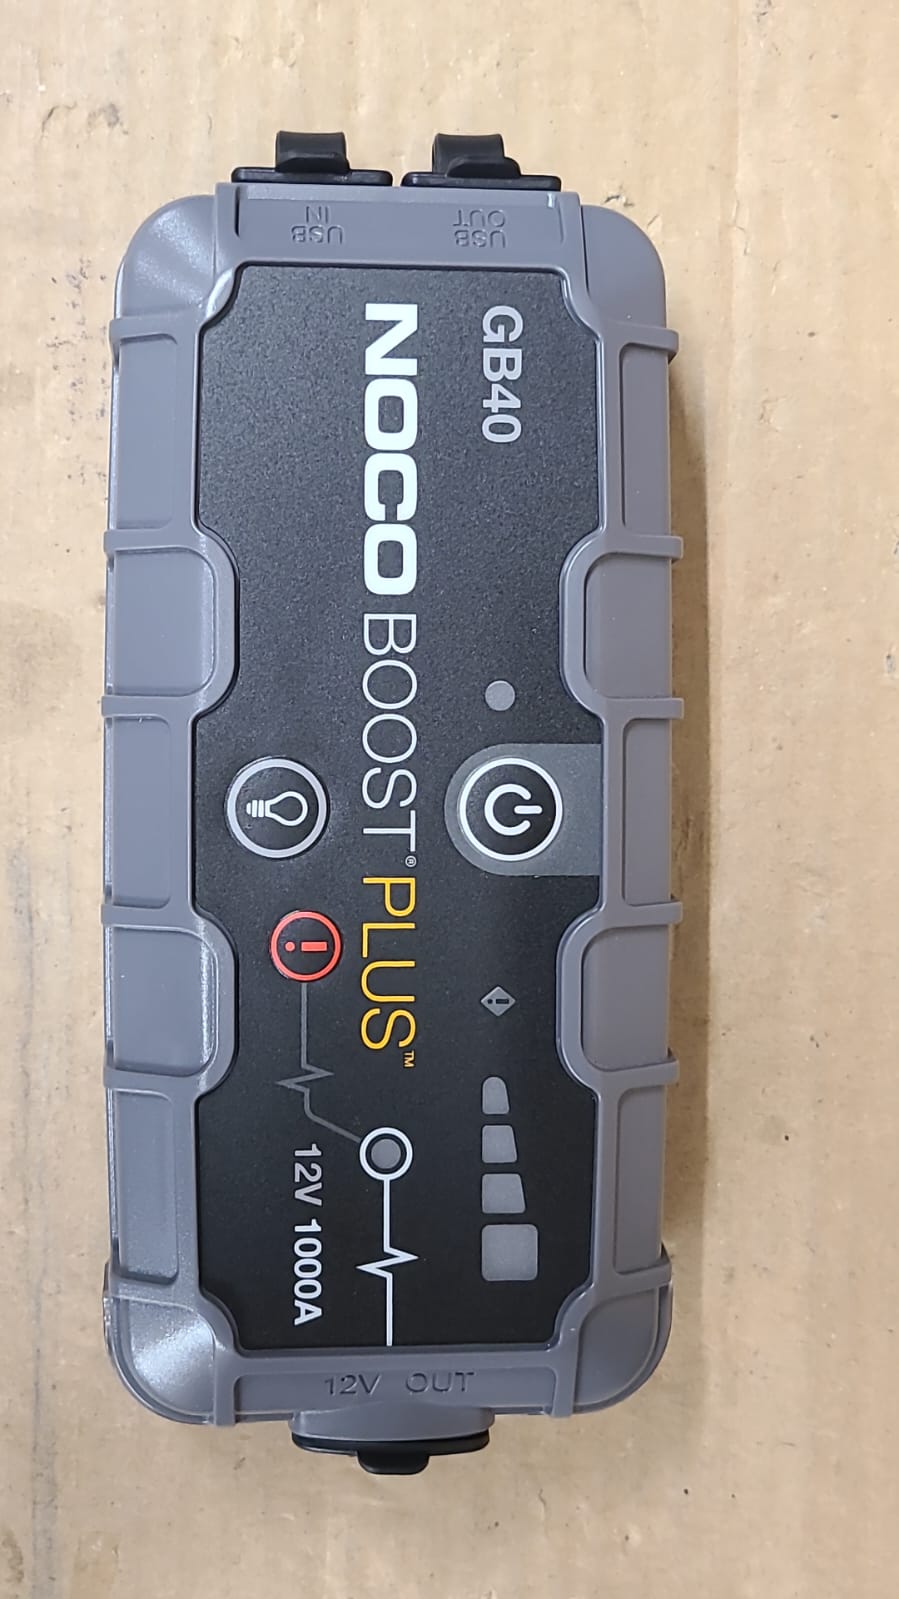 NOCO Boost Plus GB40 1000A UltraSafe Car Battery Jump Starter-4622